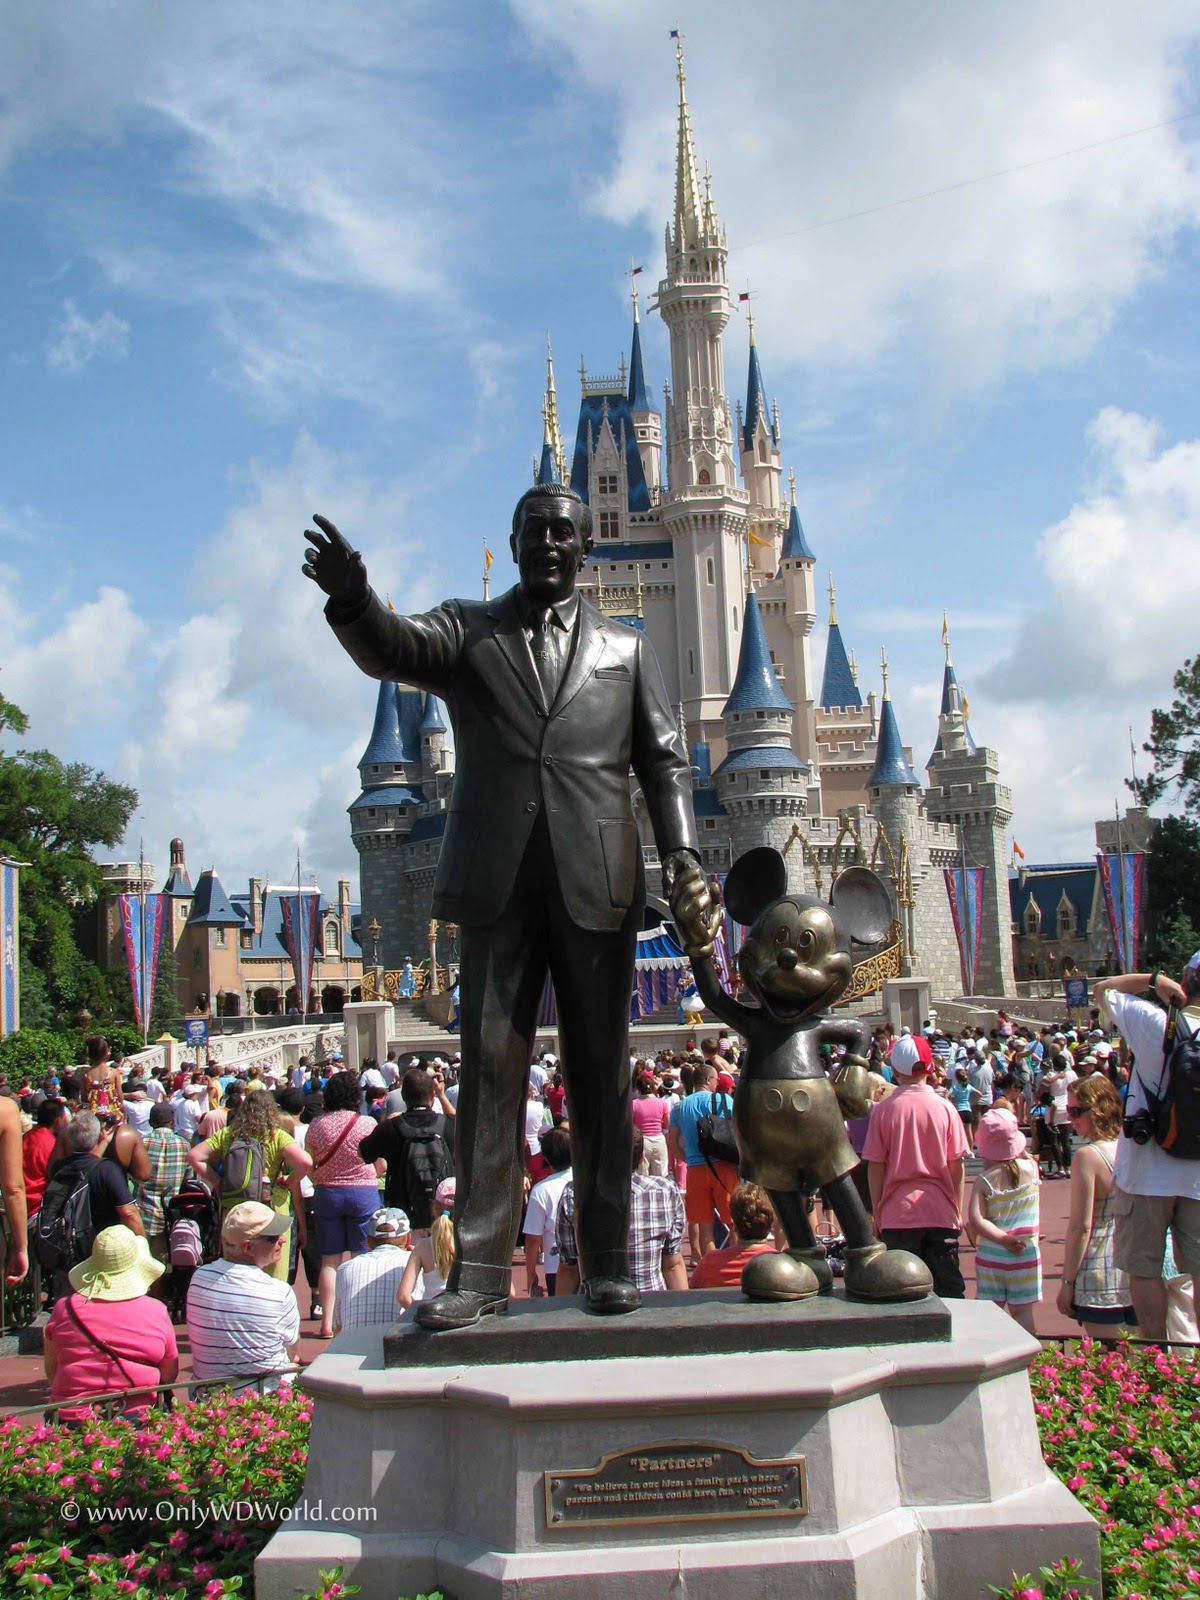 Iconic Partners Statue At Walt Disney World Resort